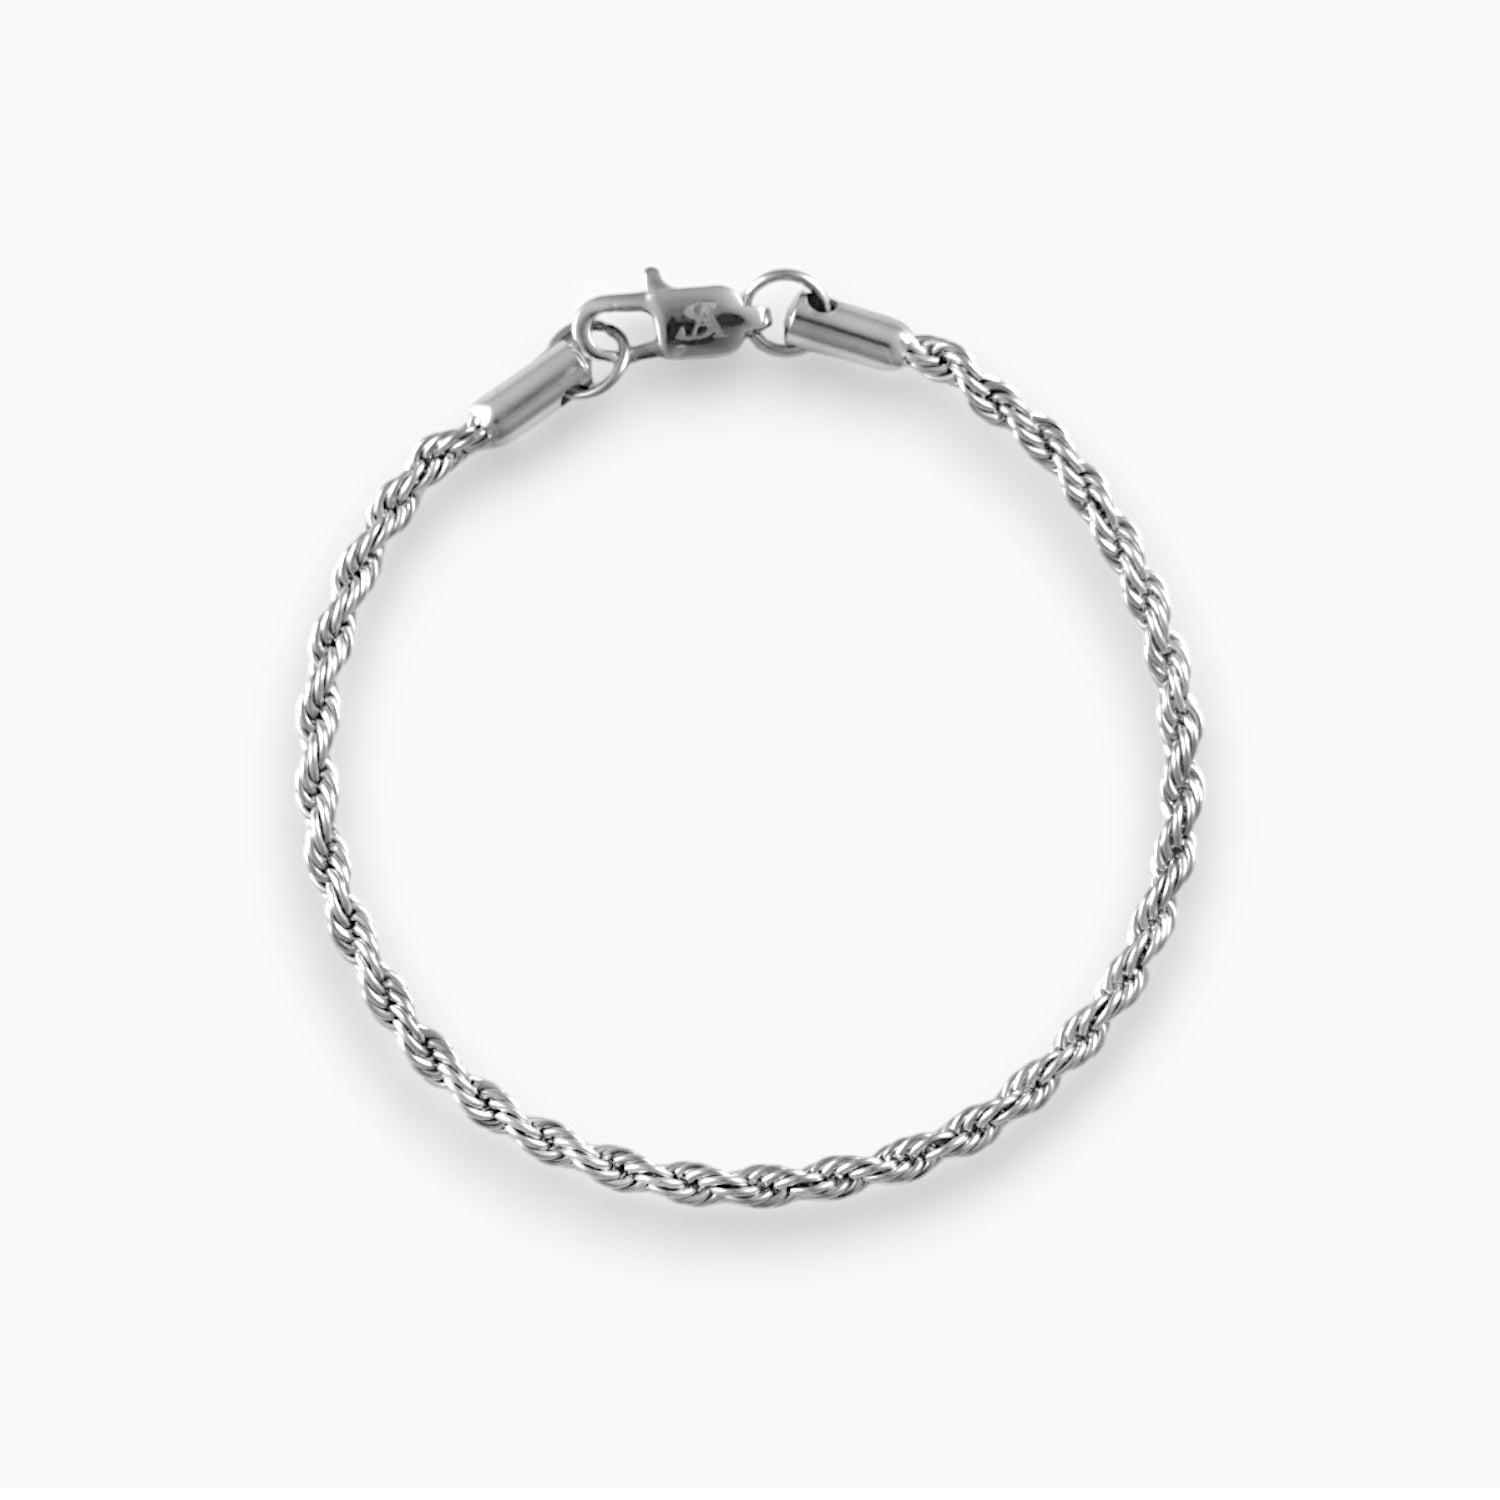 3mm silver rope bracelet